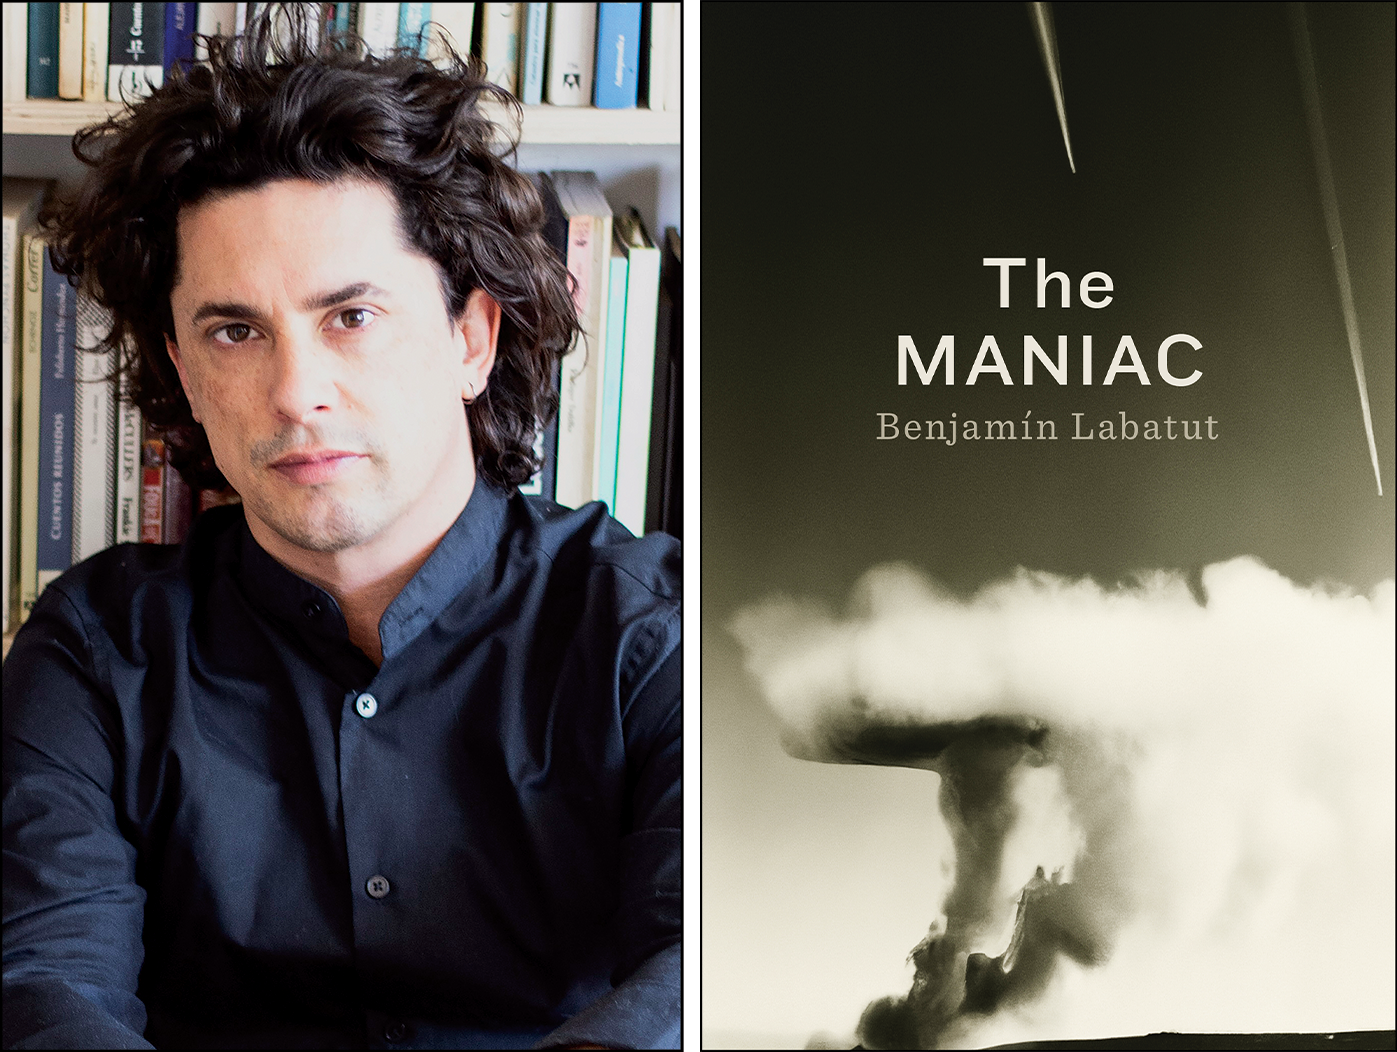 Spotlight On The Maniac By Benjamín Labatut